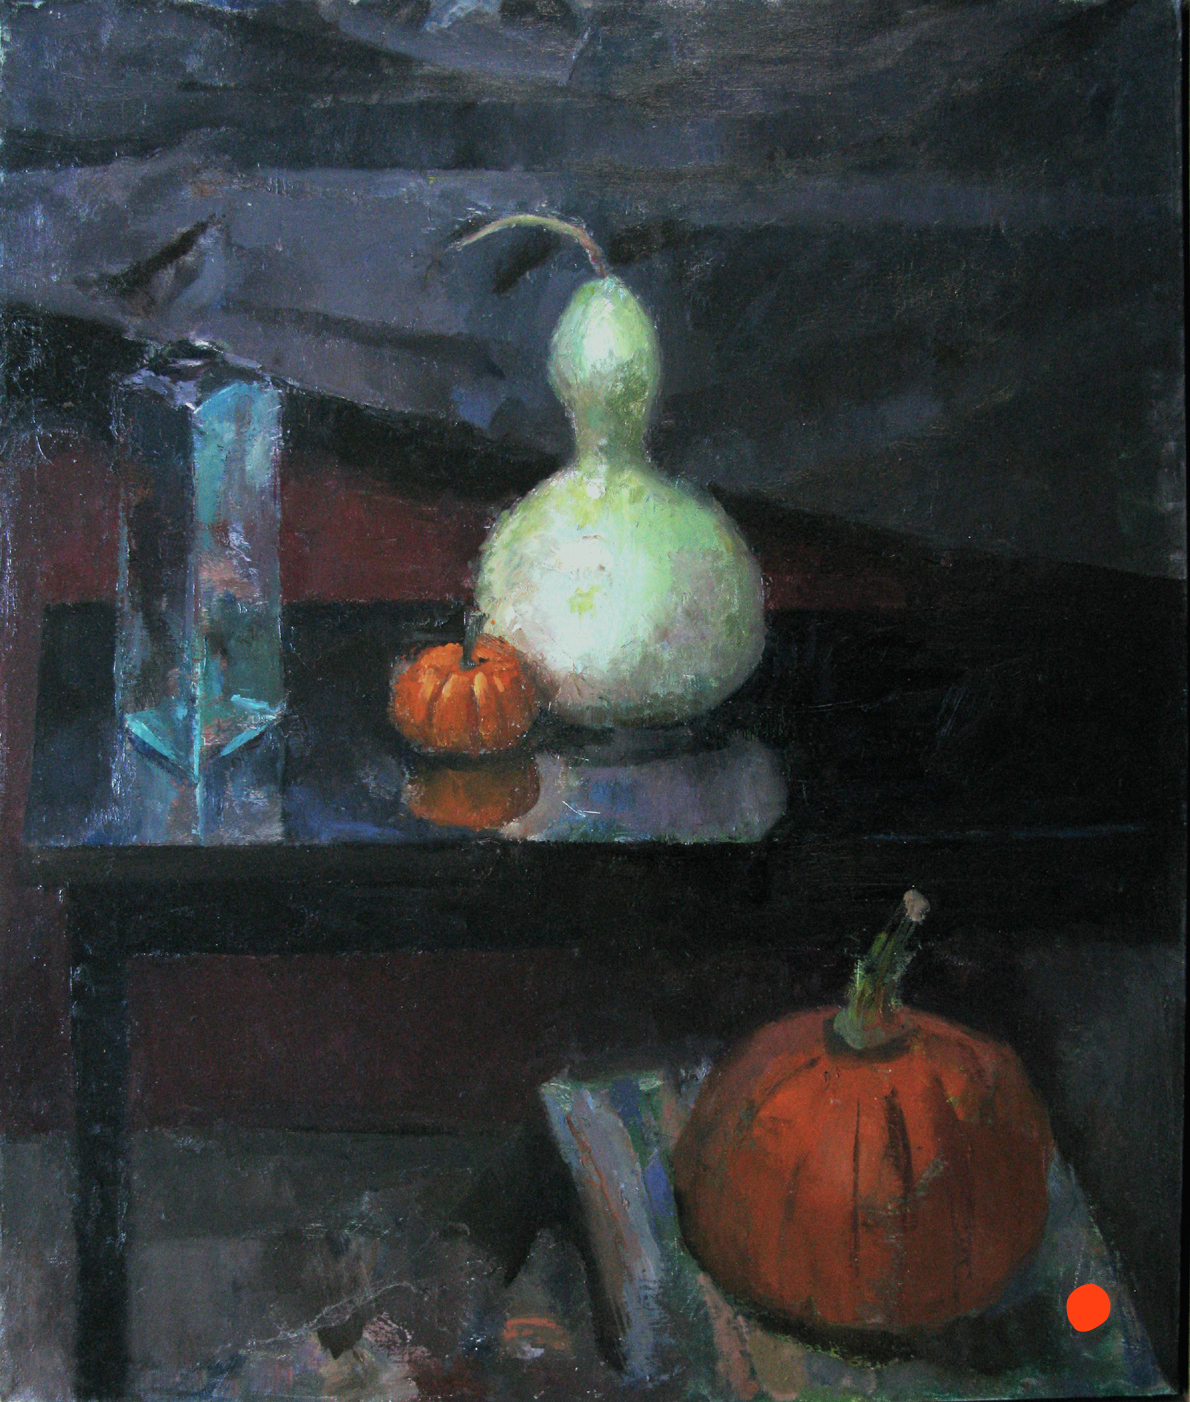 Pumpkins, Gourd and Bottle, 31" x 27", oil on linen, 2004.